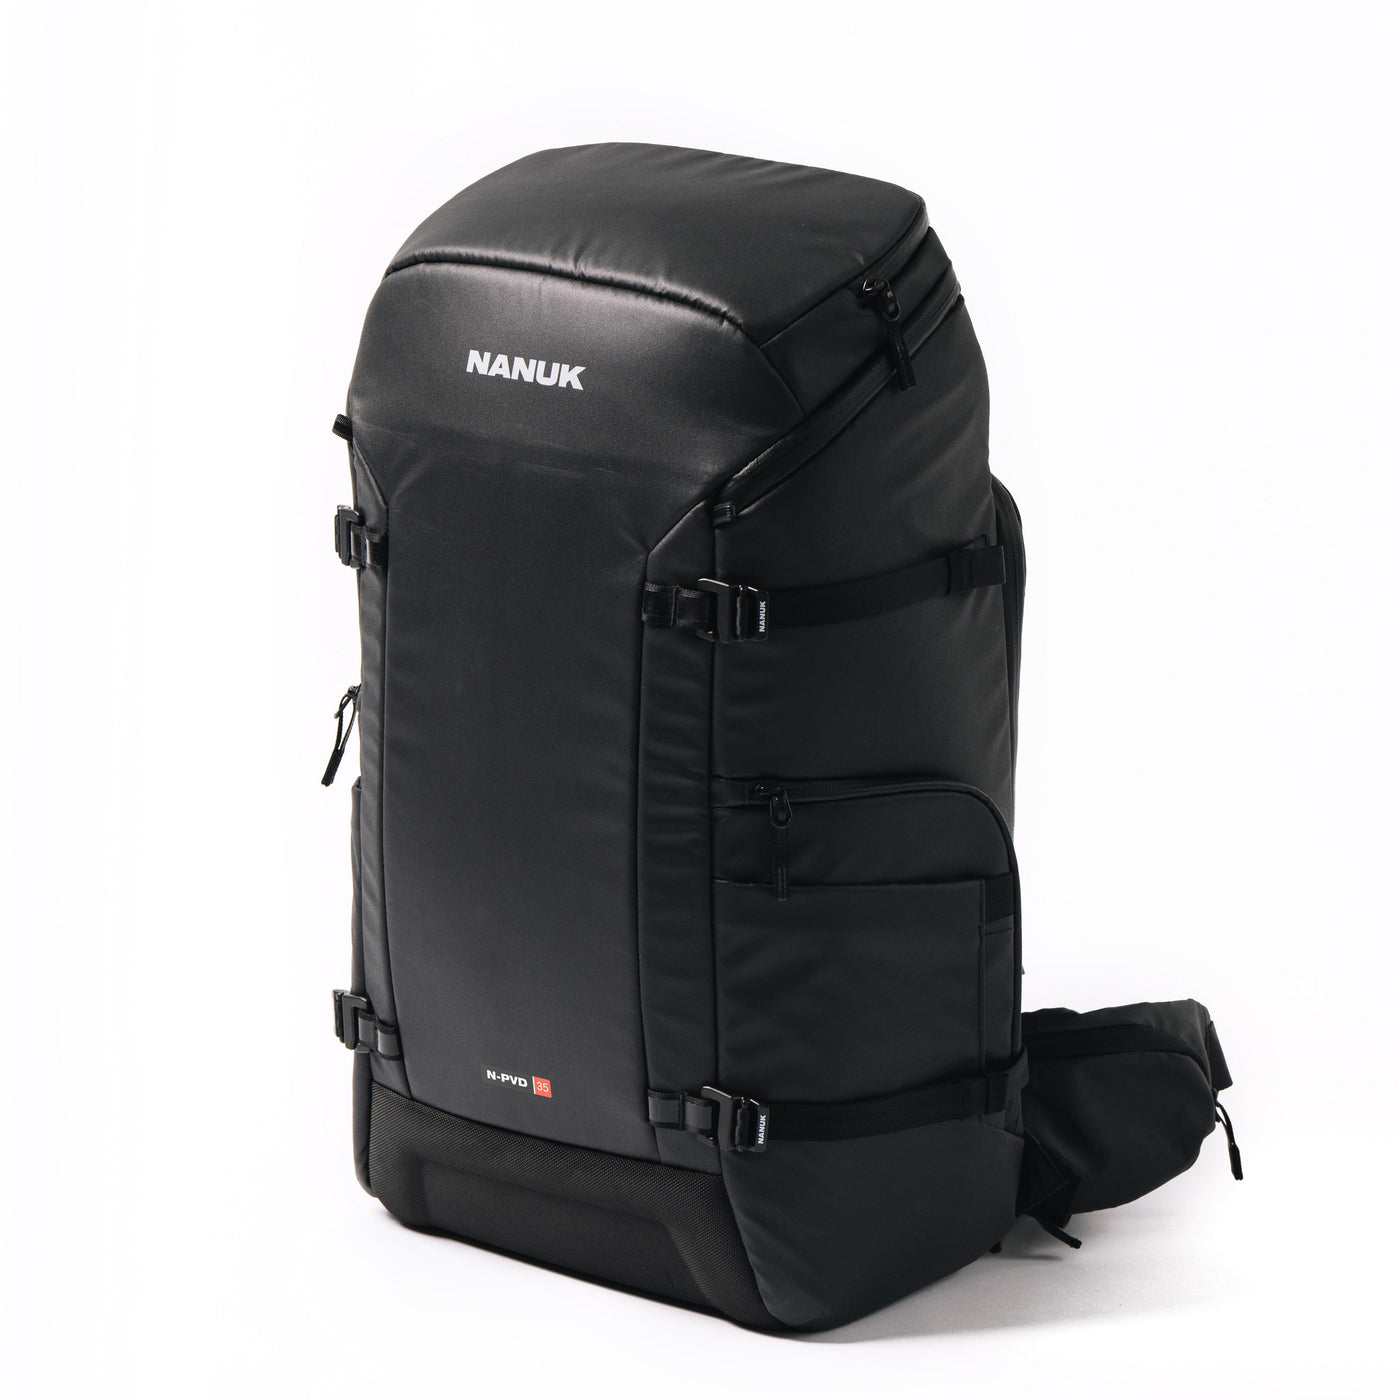 Nanuk backpack 35L Angle